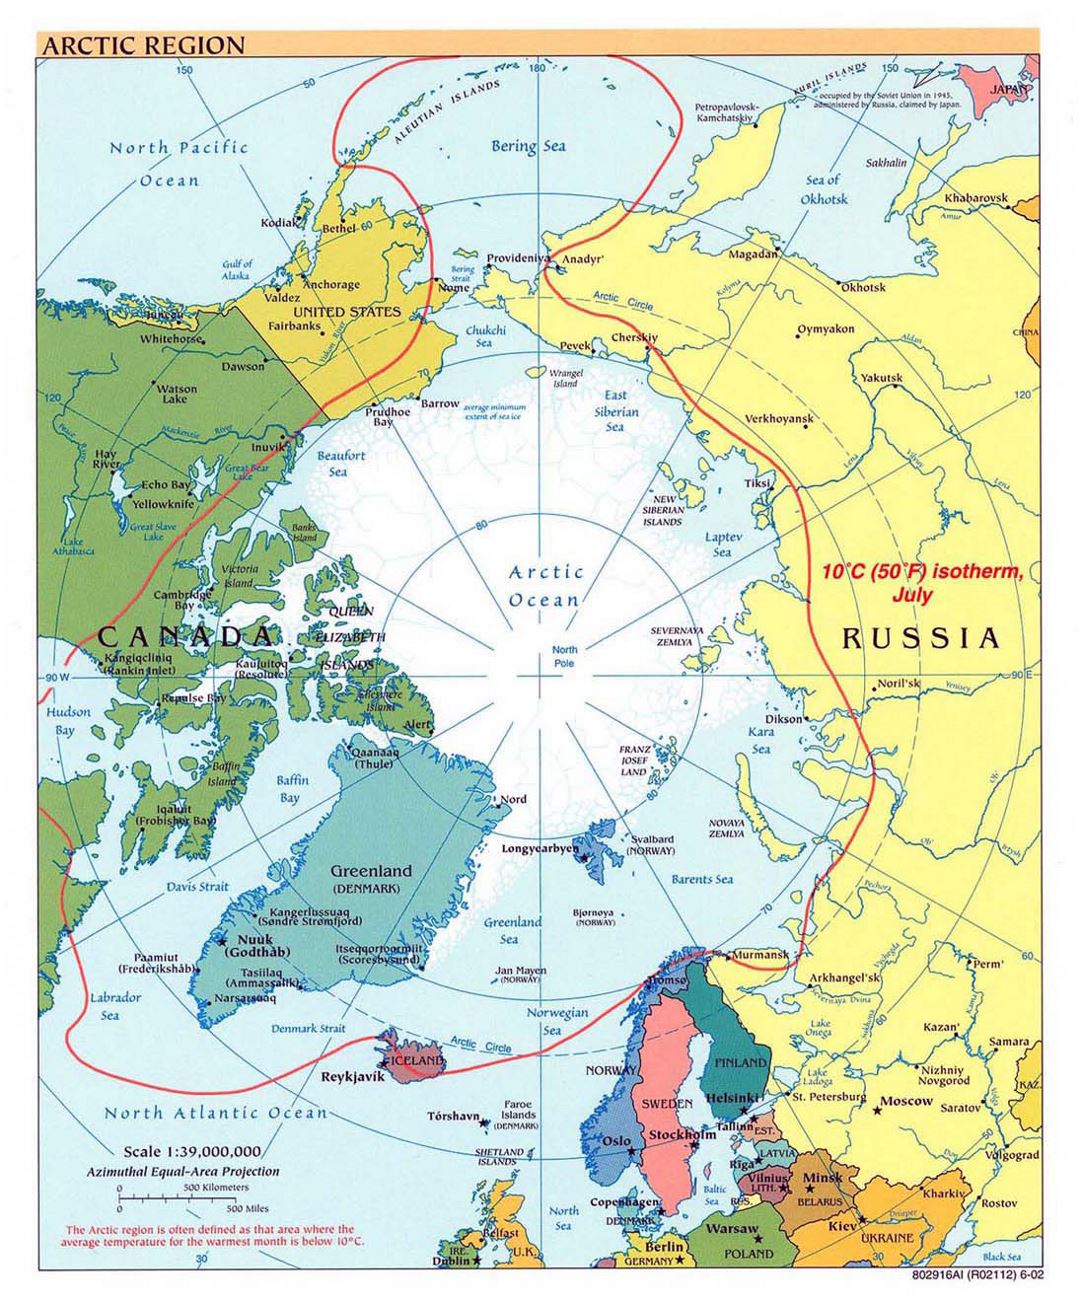 Large Arctic Region political map - 2002